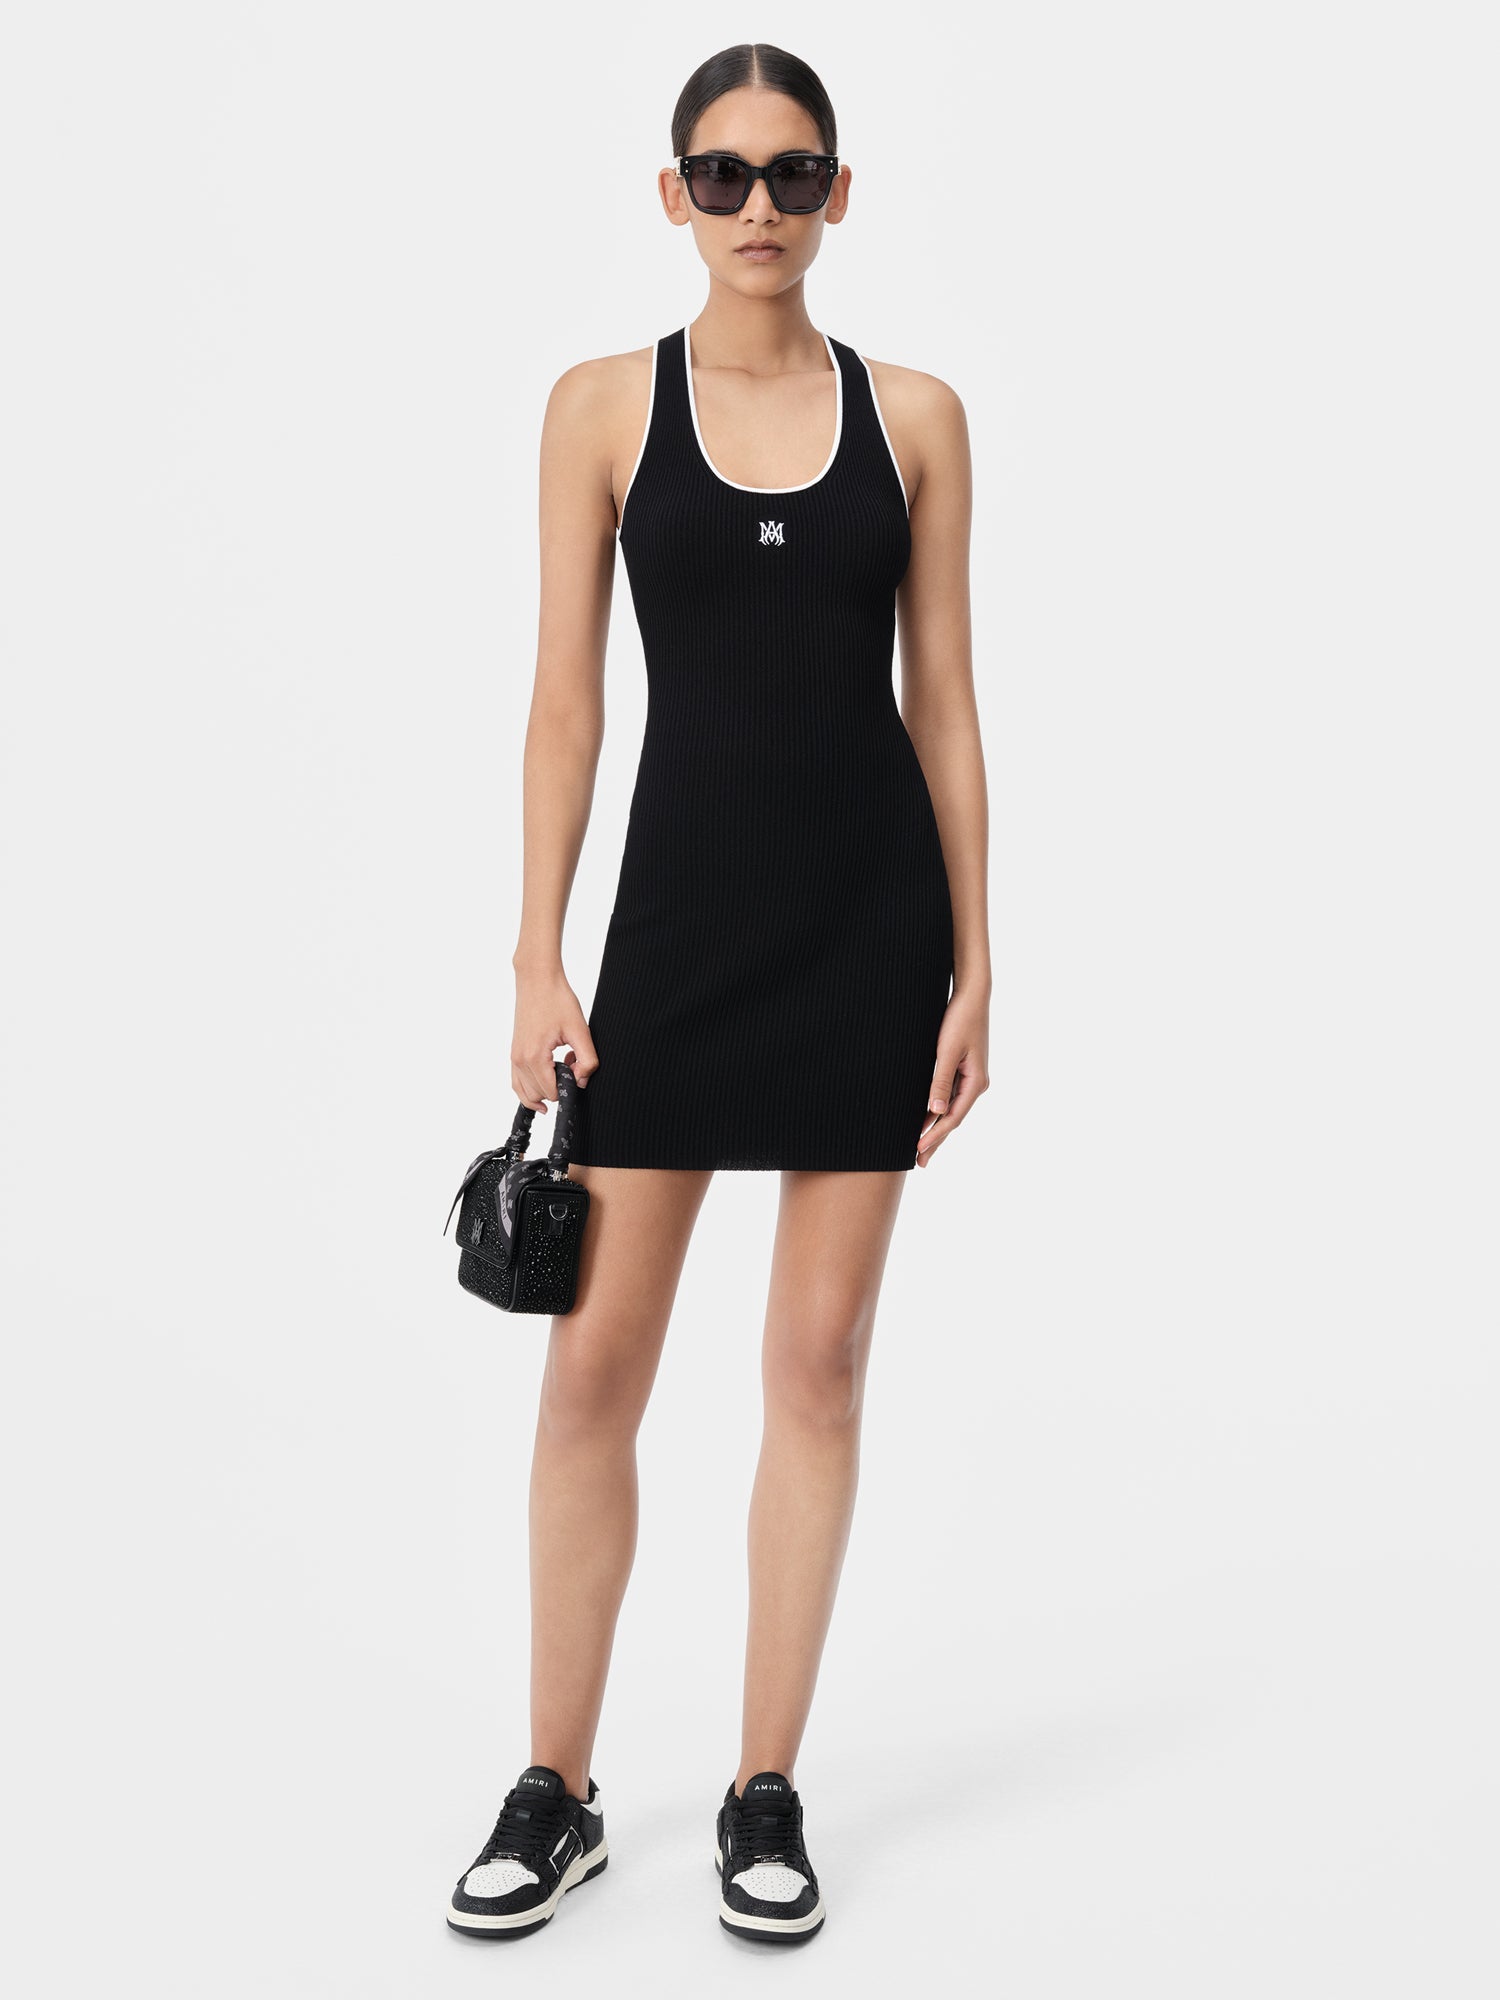 Product WOMEN - WOMEN'S MA MINI DRESS - Black featured image